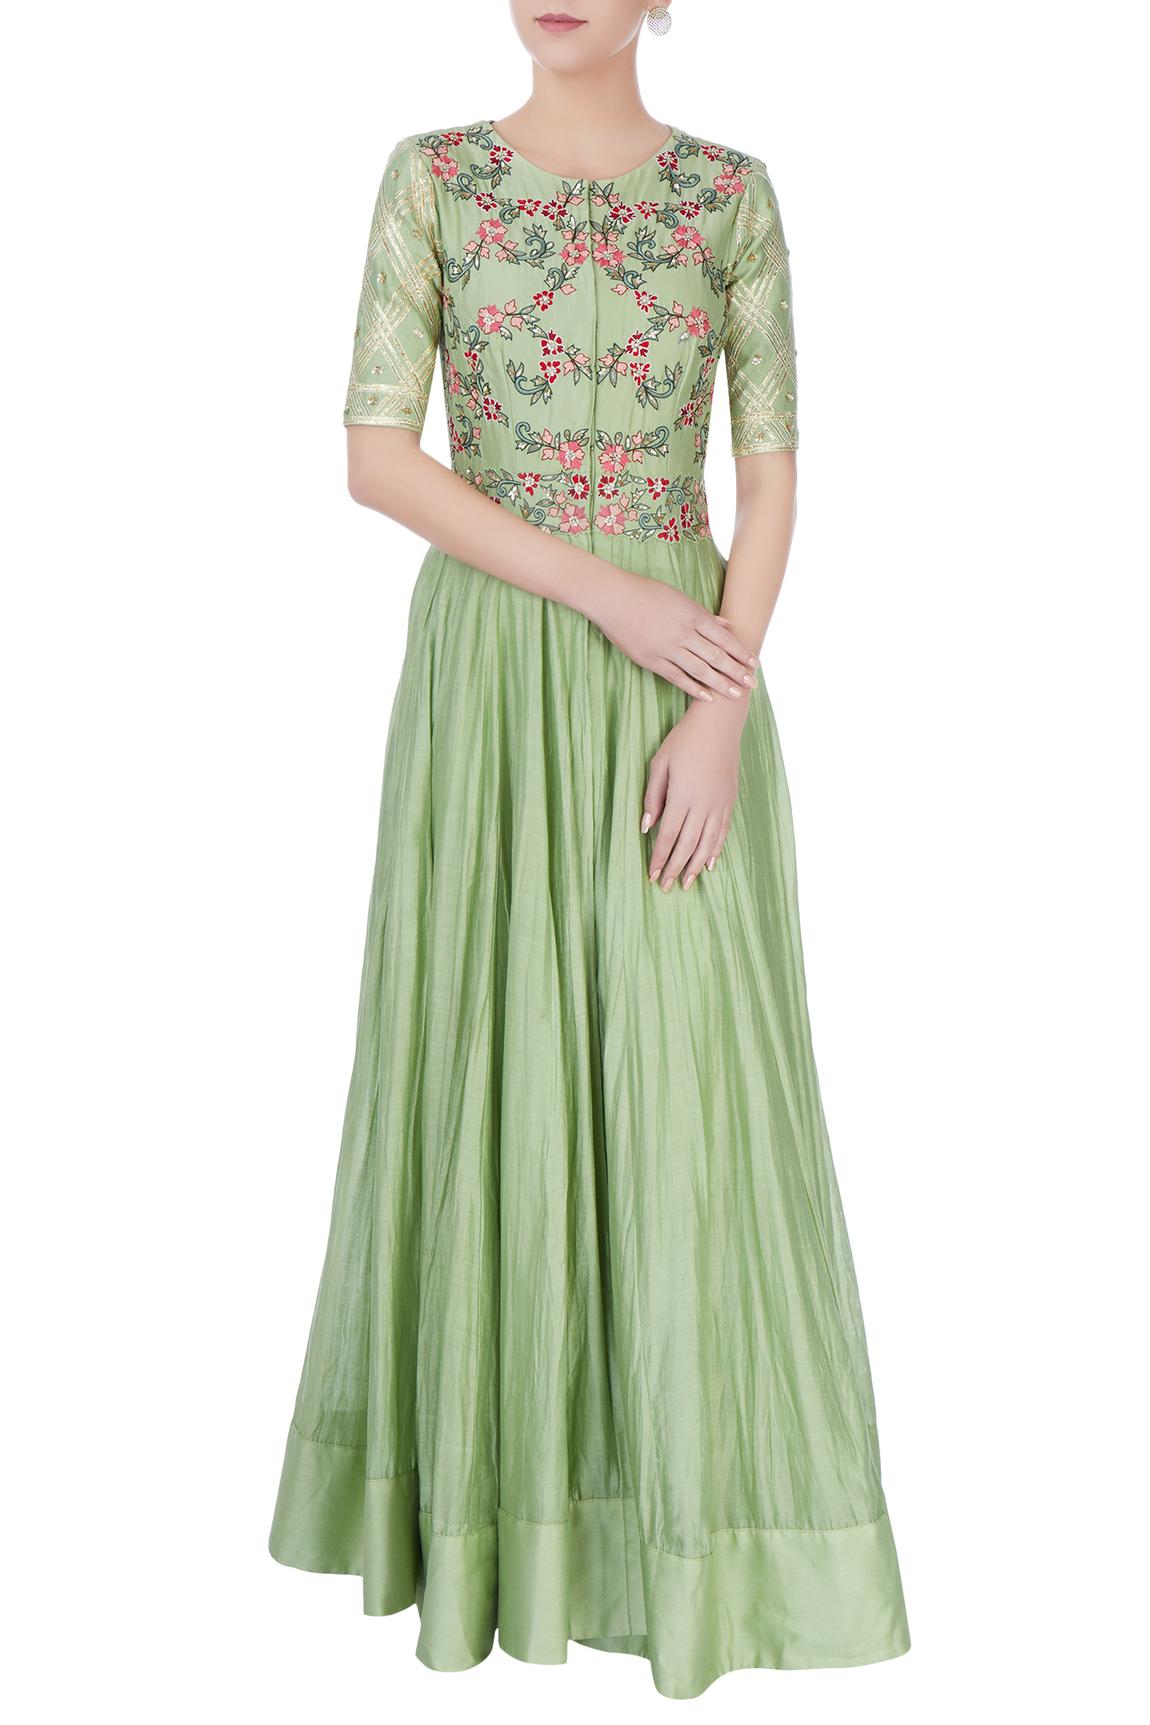 Pastel Green Embroidered Anarkali Dress